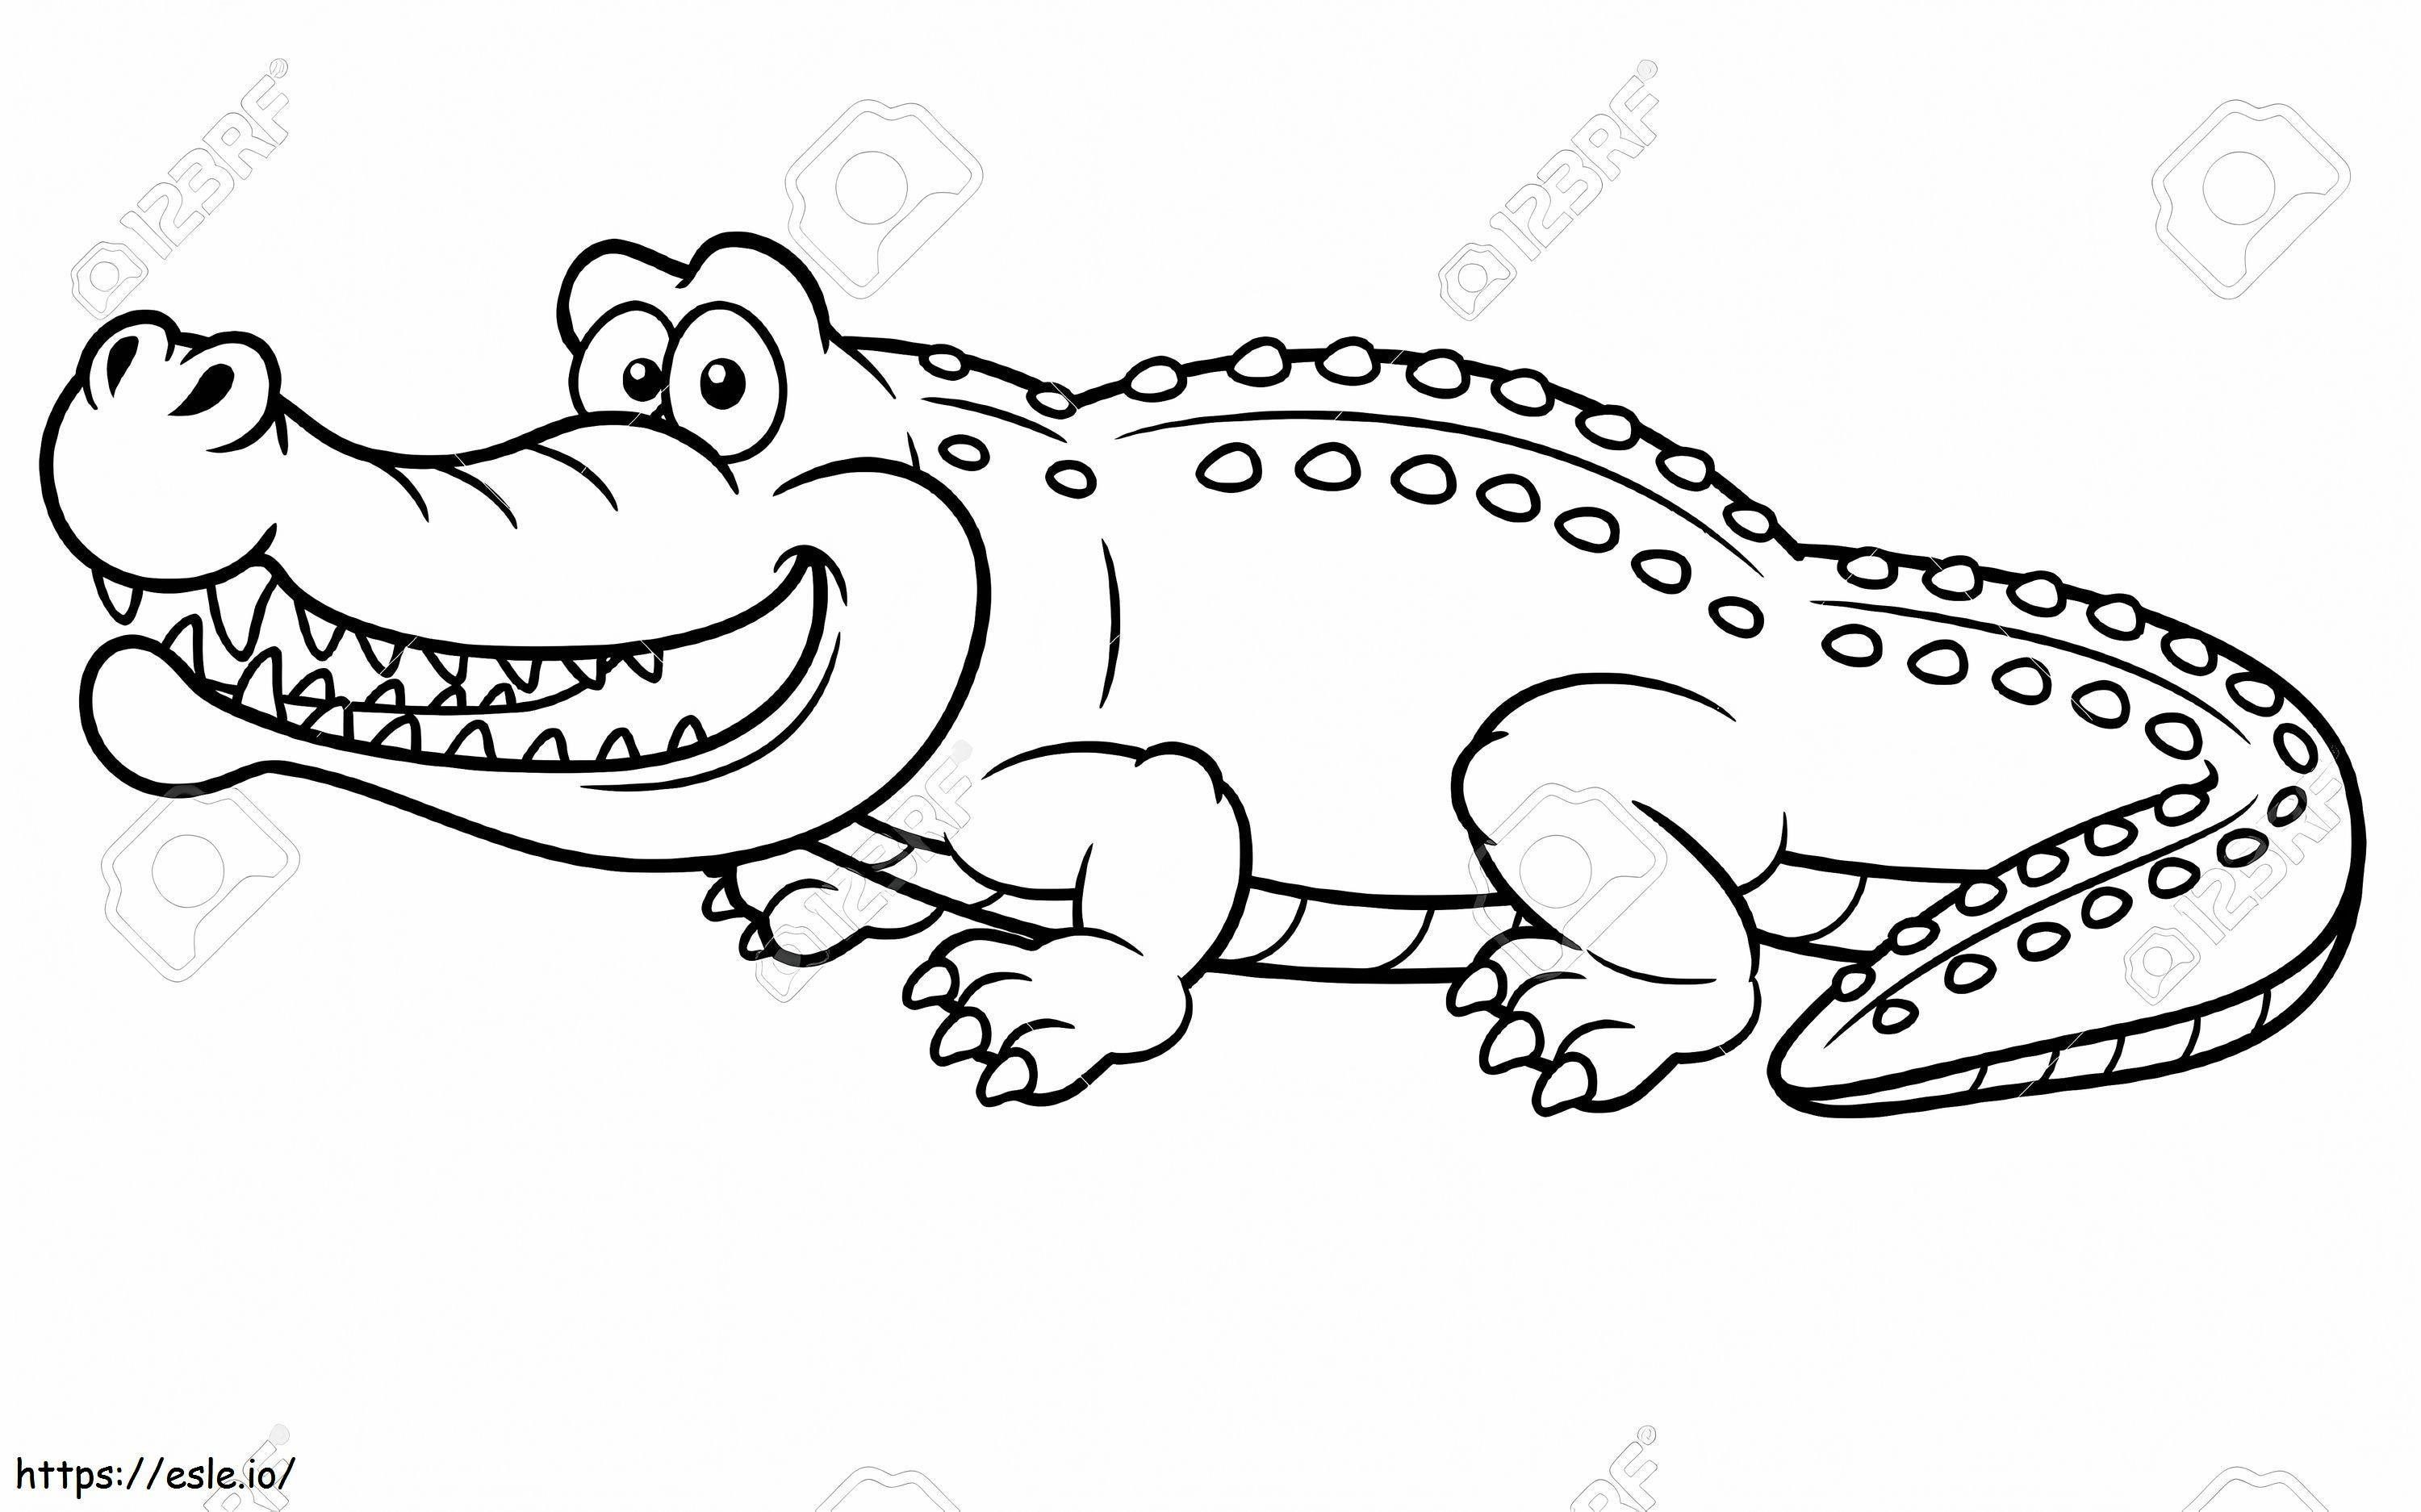 1528531885 Alligatora4 coloring page